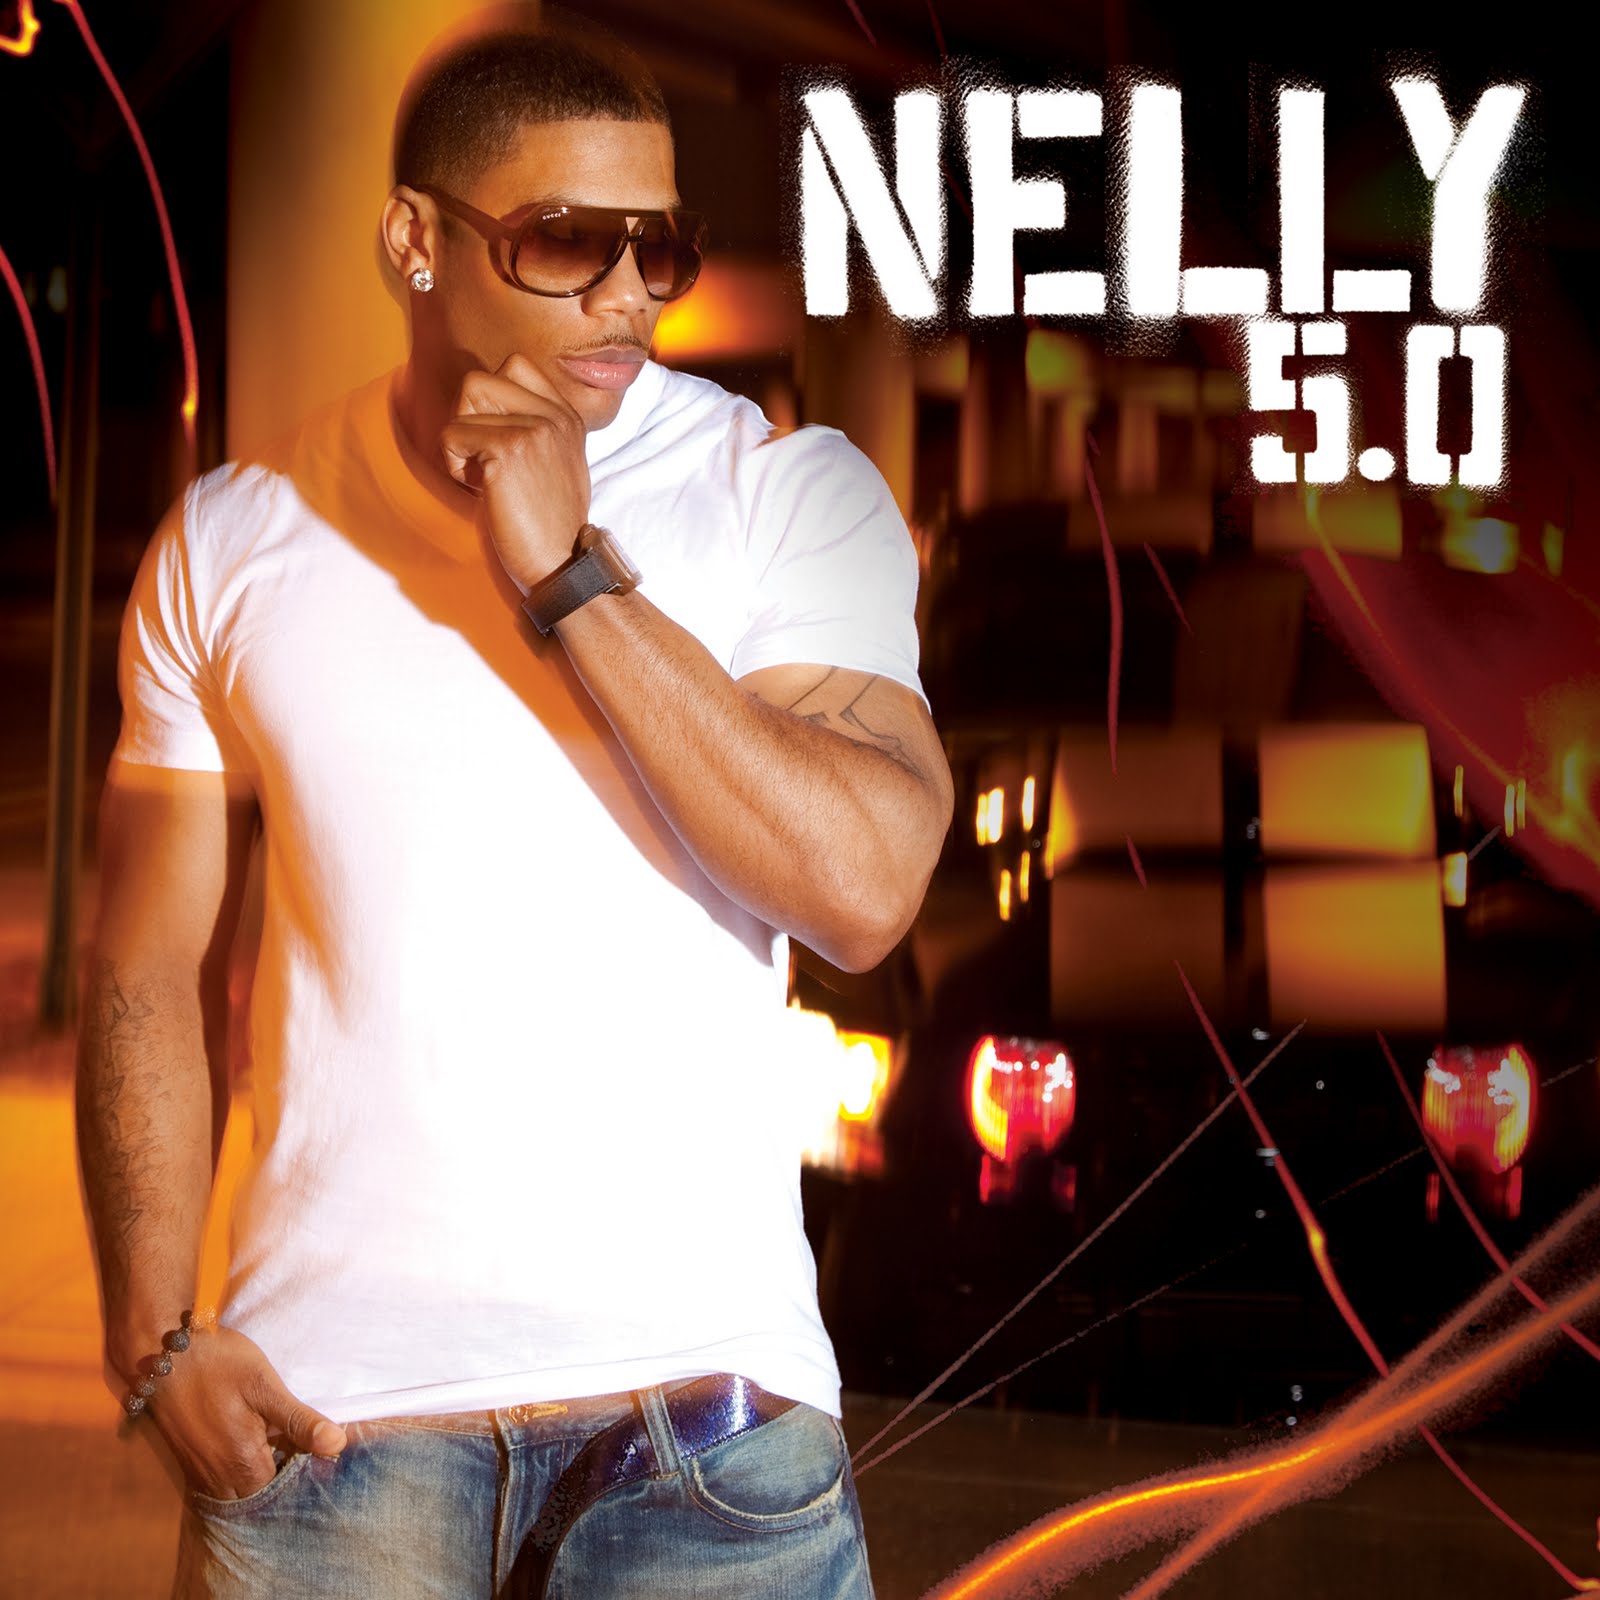 http://3.bp.blogspot.com/_KDvzKXcML4E/TOClKfRzdUI/AAAAAAAAD3o/zrYIK35jY7c/s1600/Nelly-5.0-album-cover.jpg